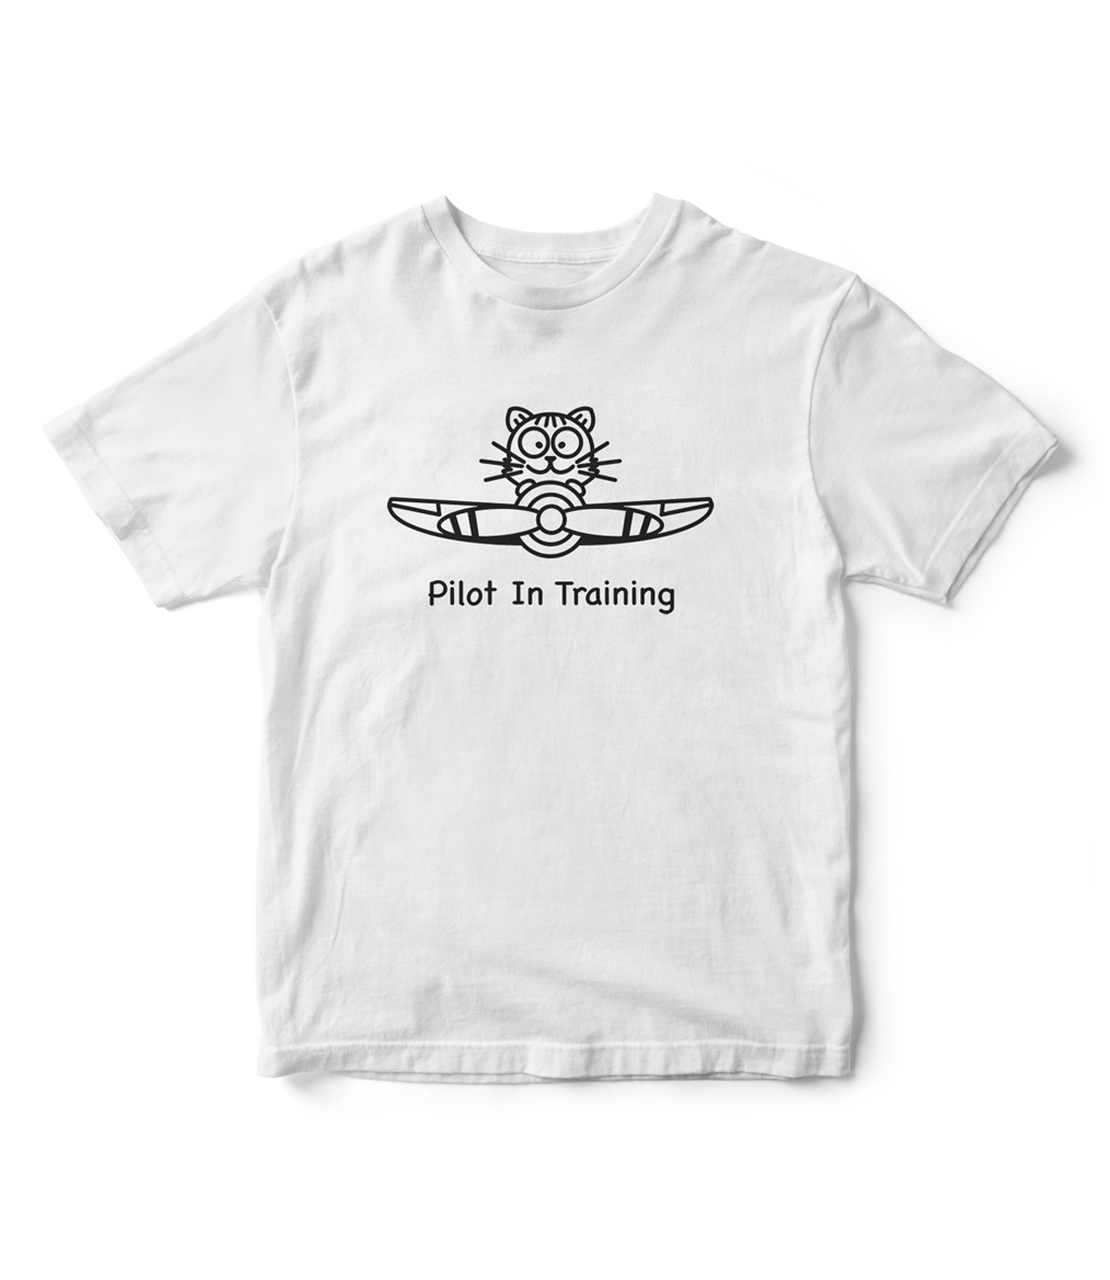 Pilot in Training T-Shirt (White)